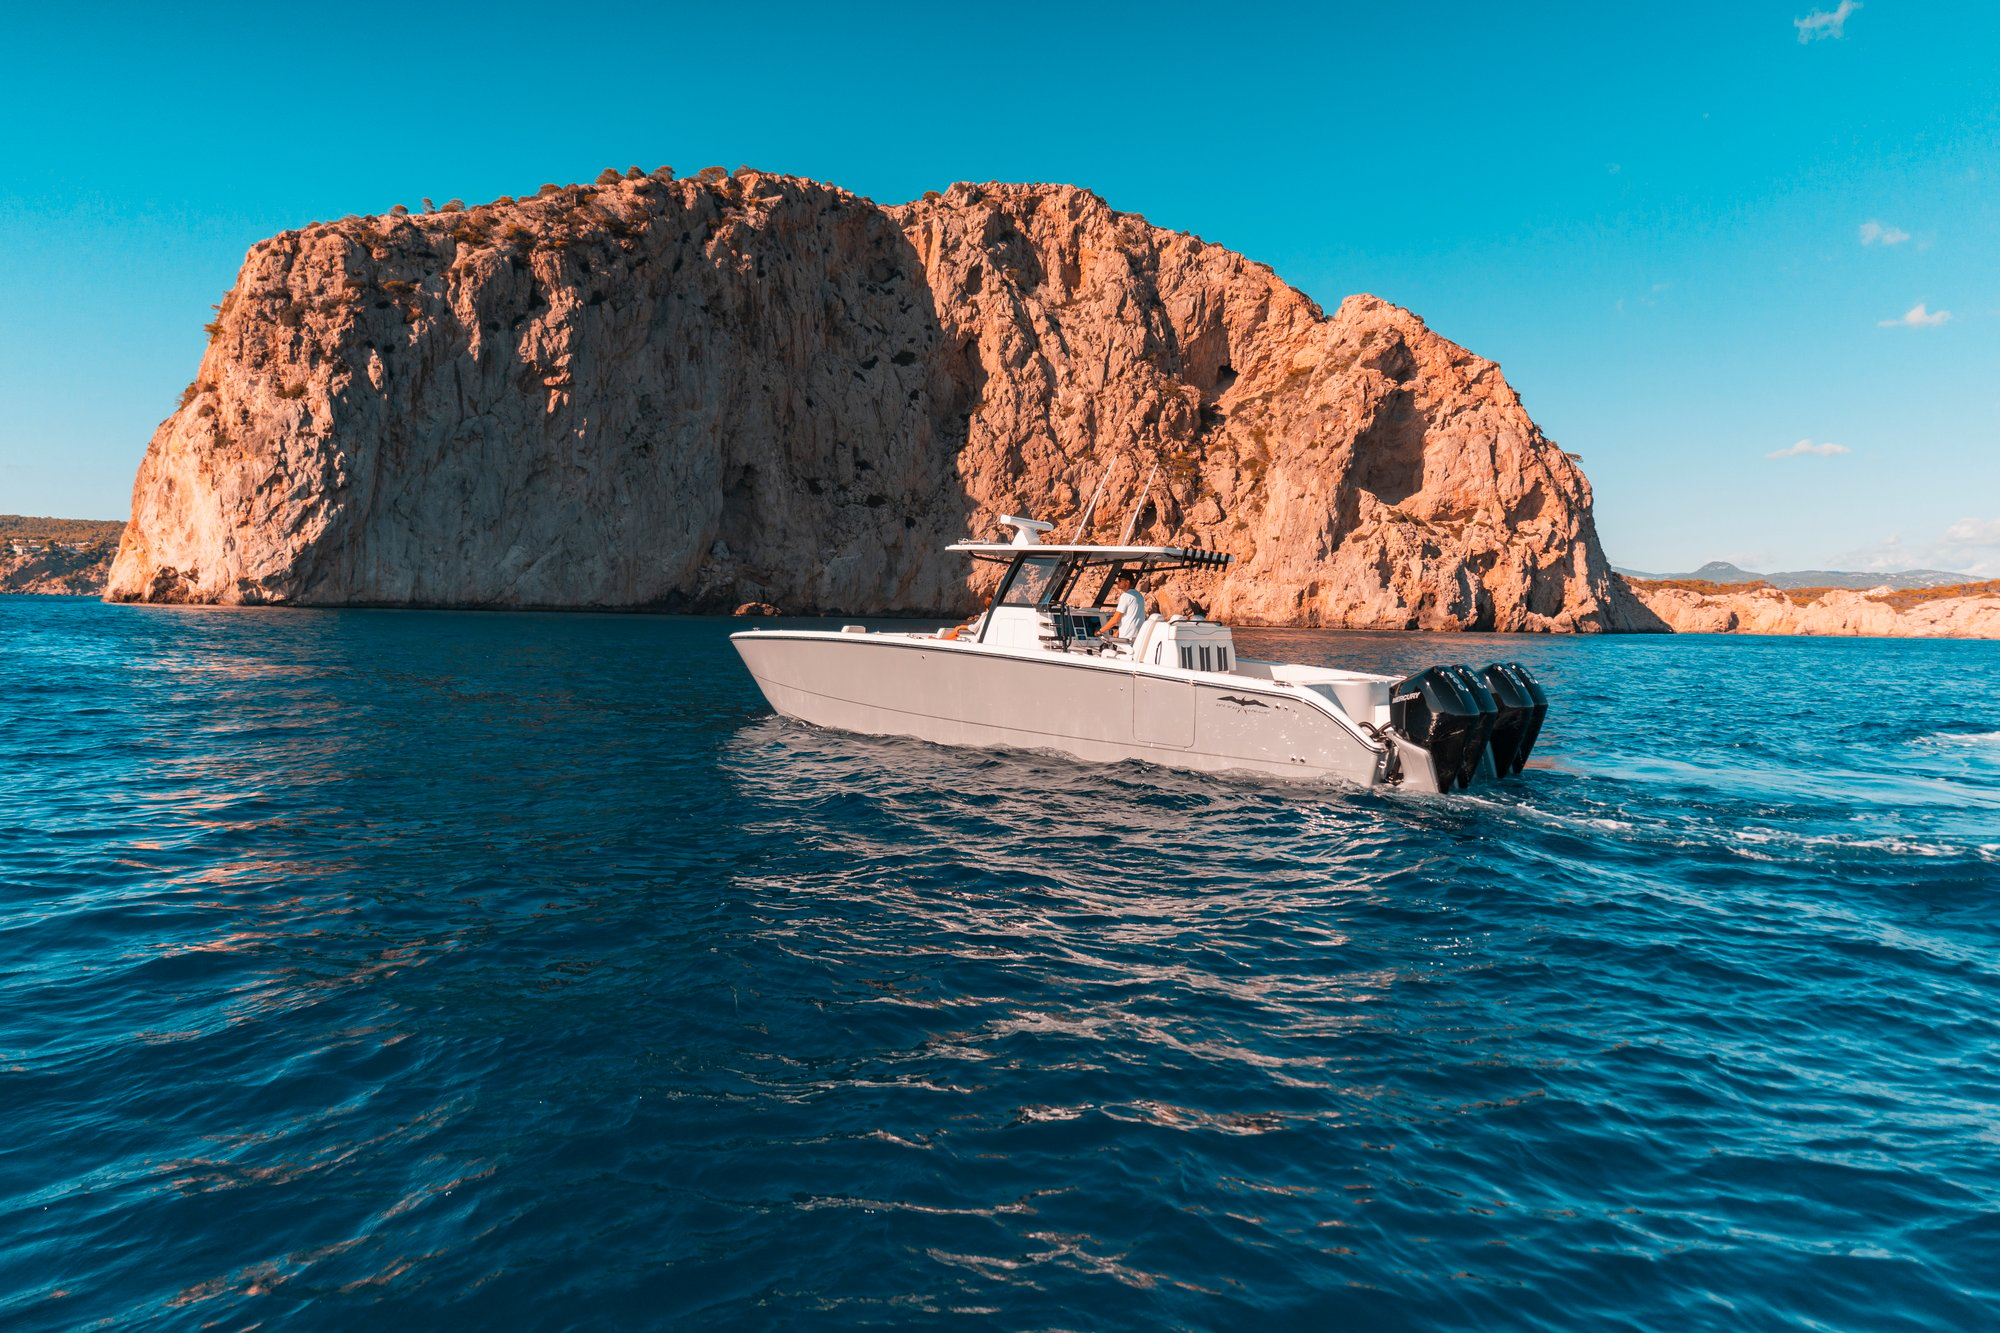 Invincible 37 Catamaran - the very fastest best handling boat to buy in Palma, Mallorca, Balearics